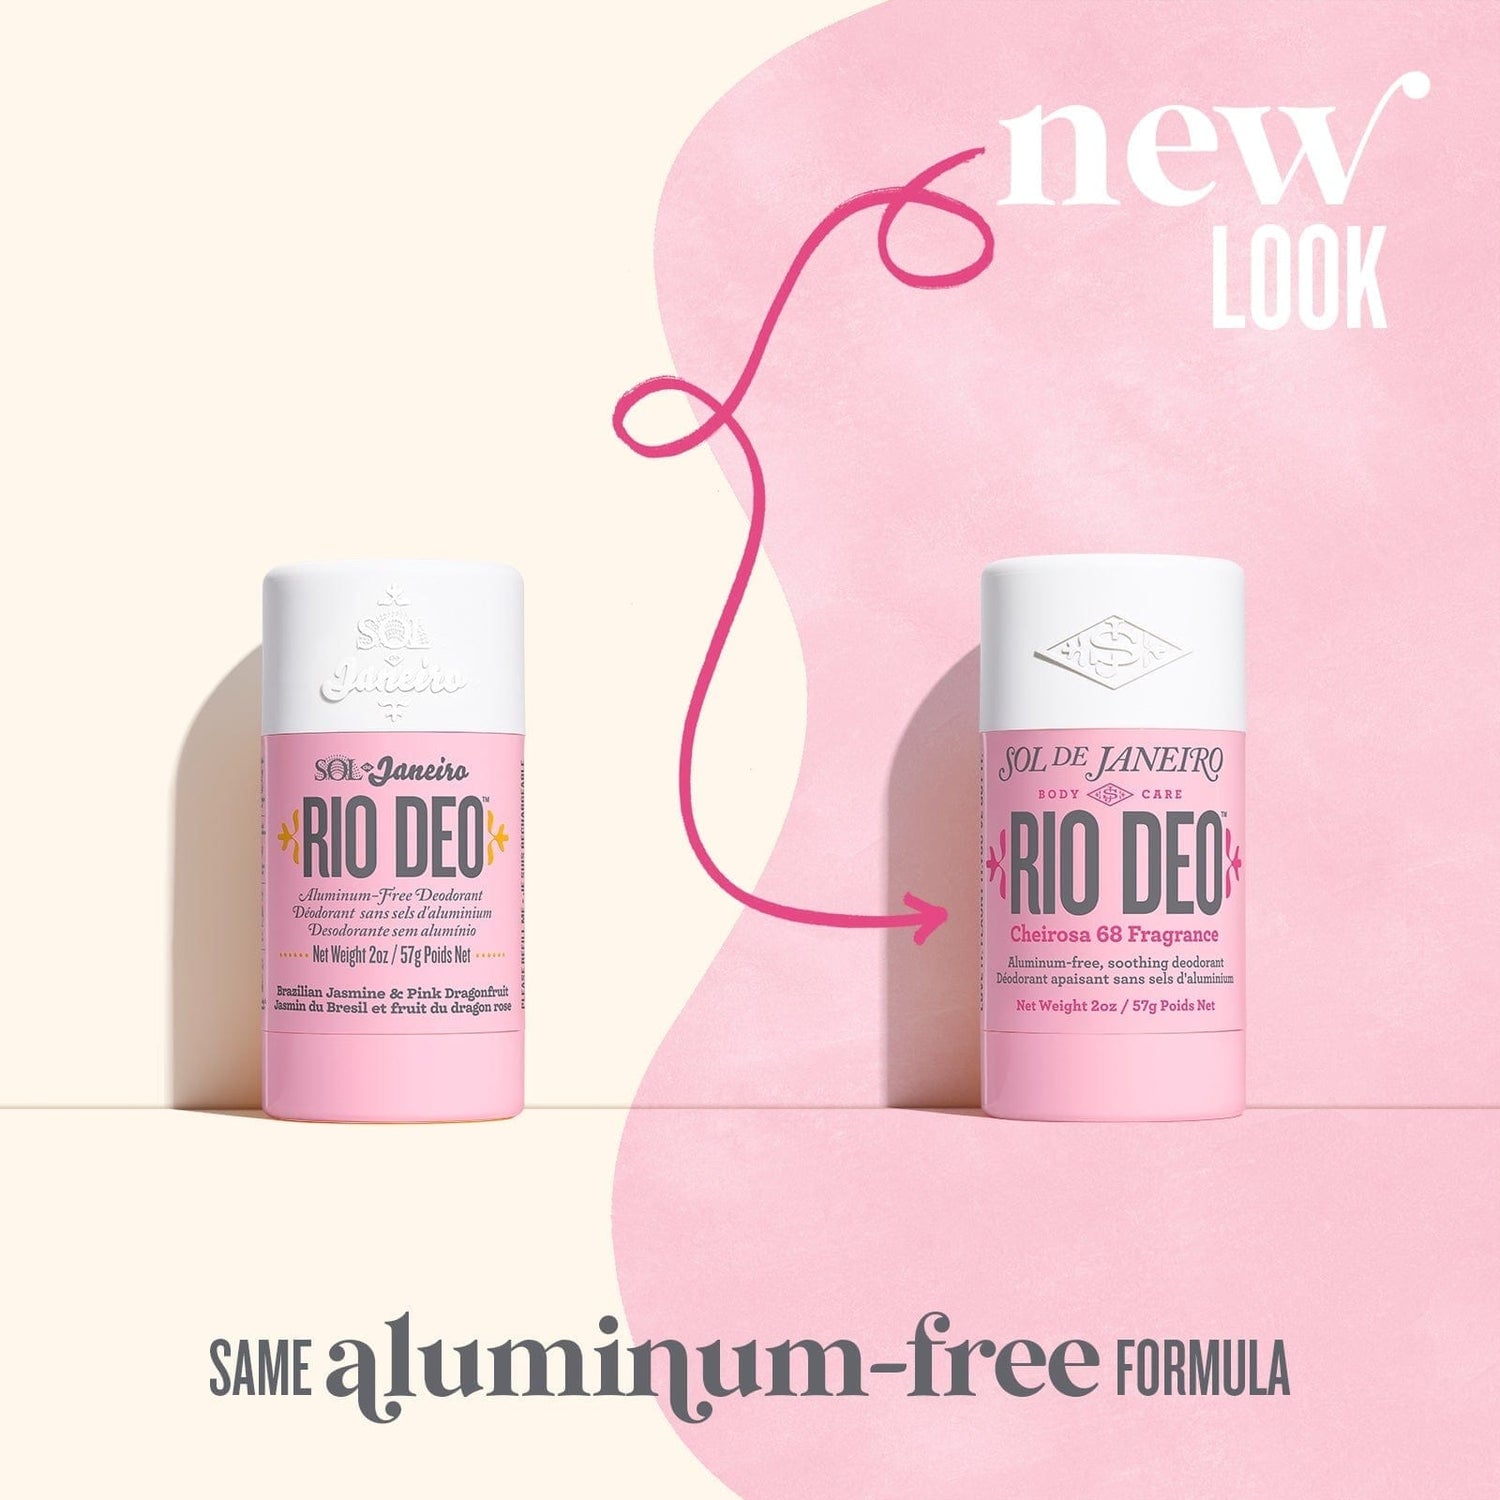 New look - same aluminum free formula